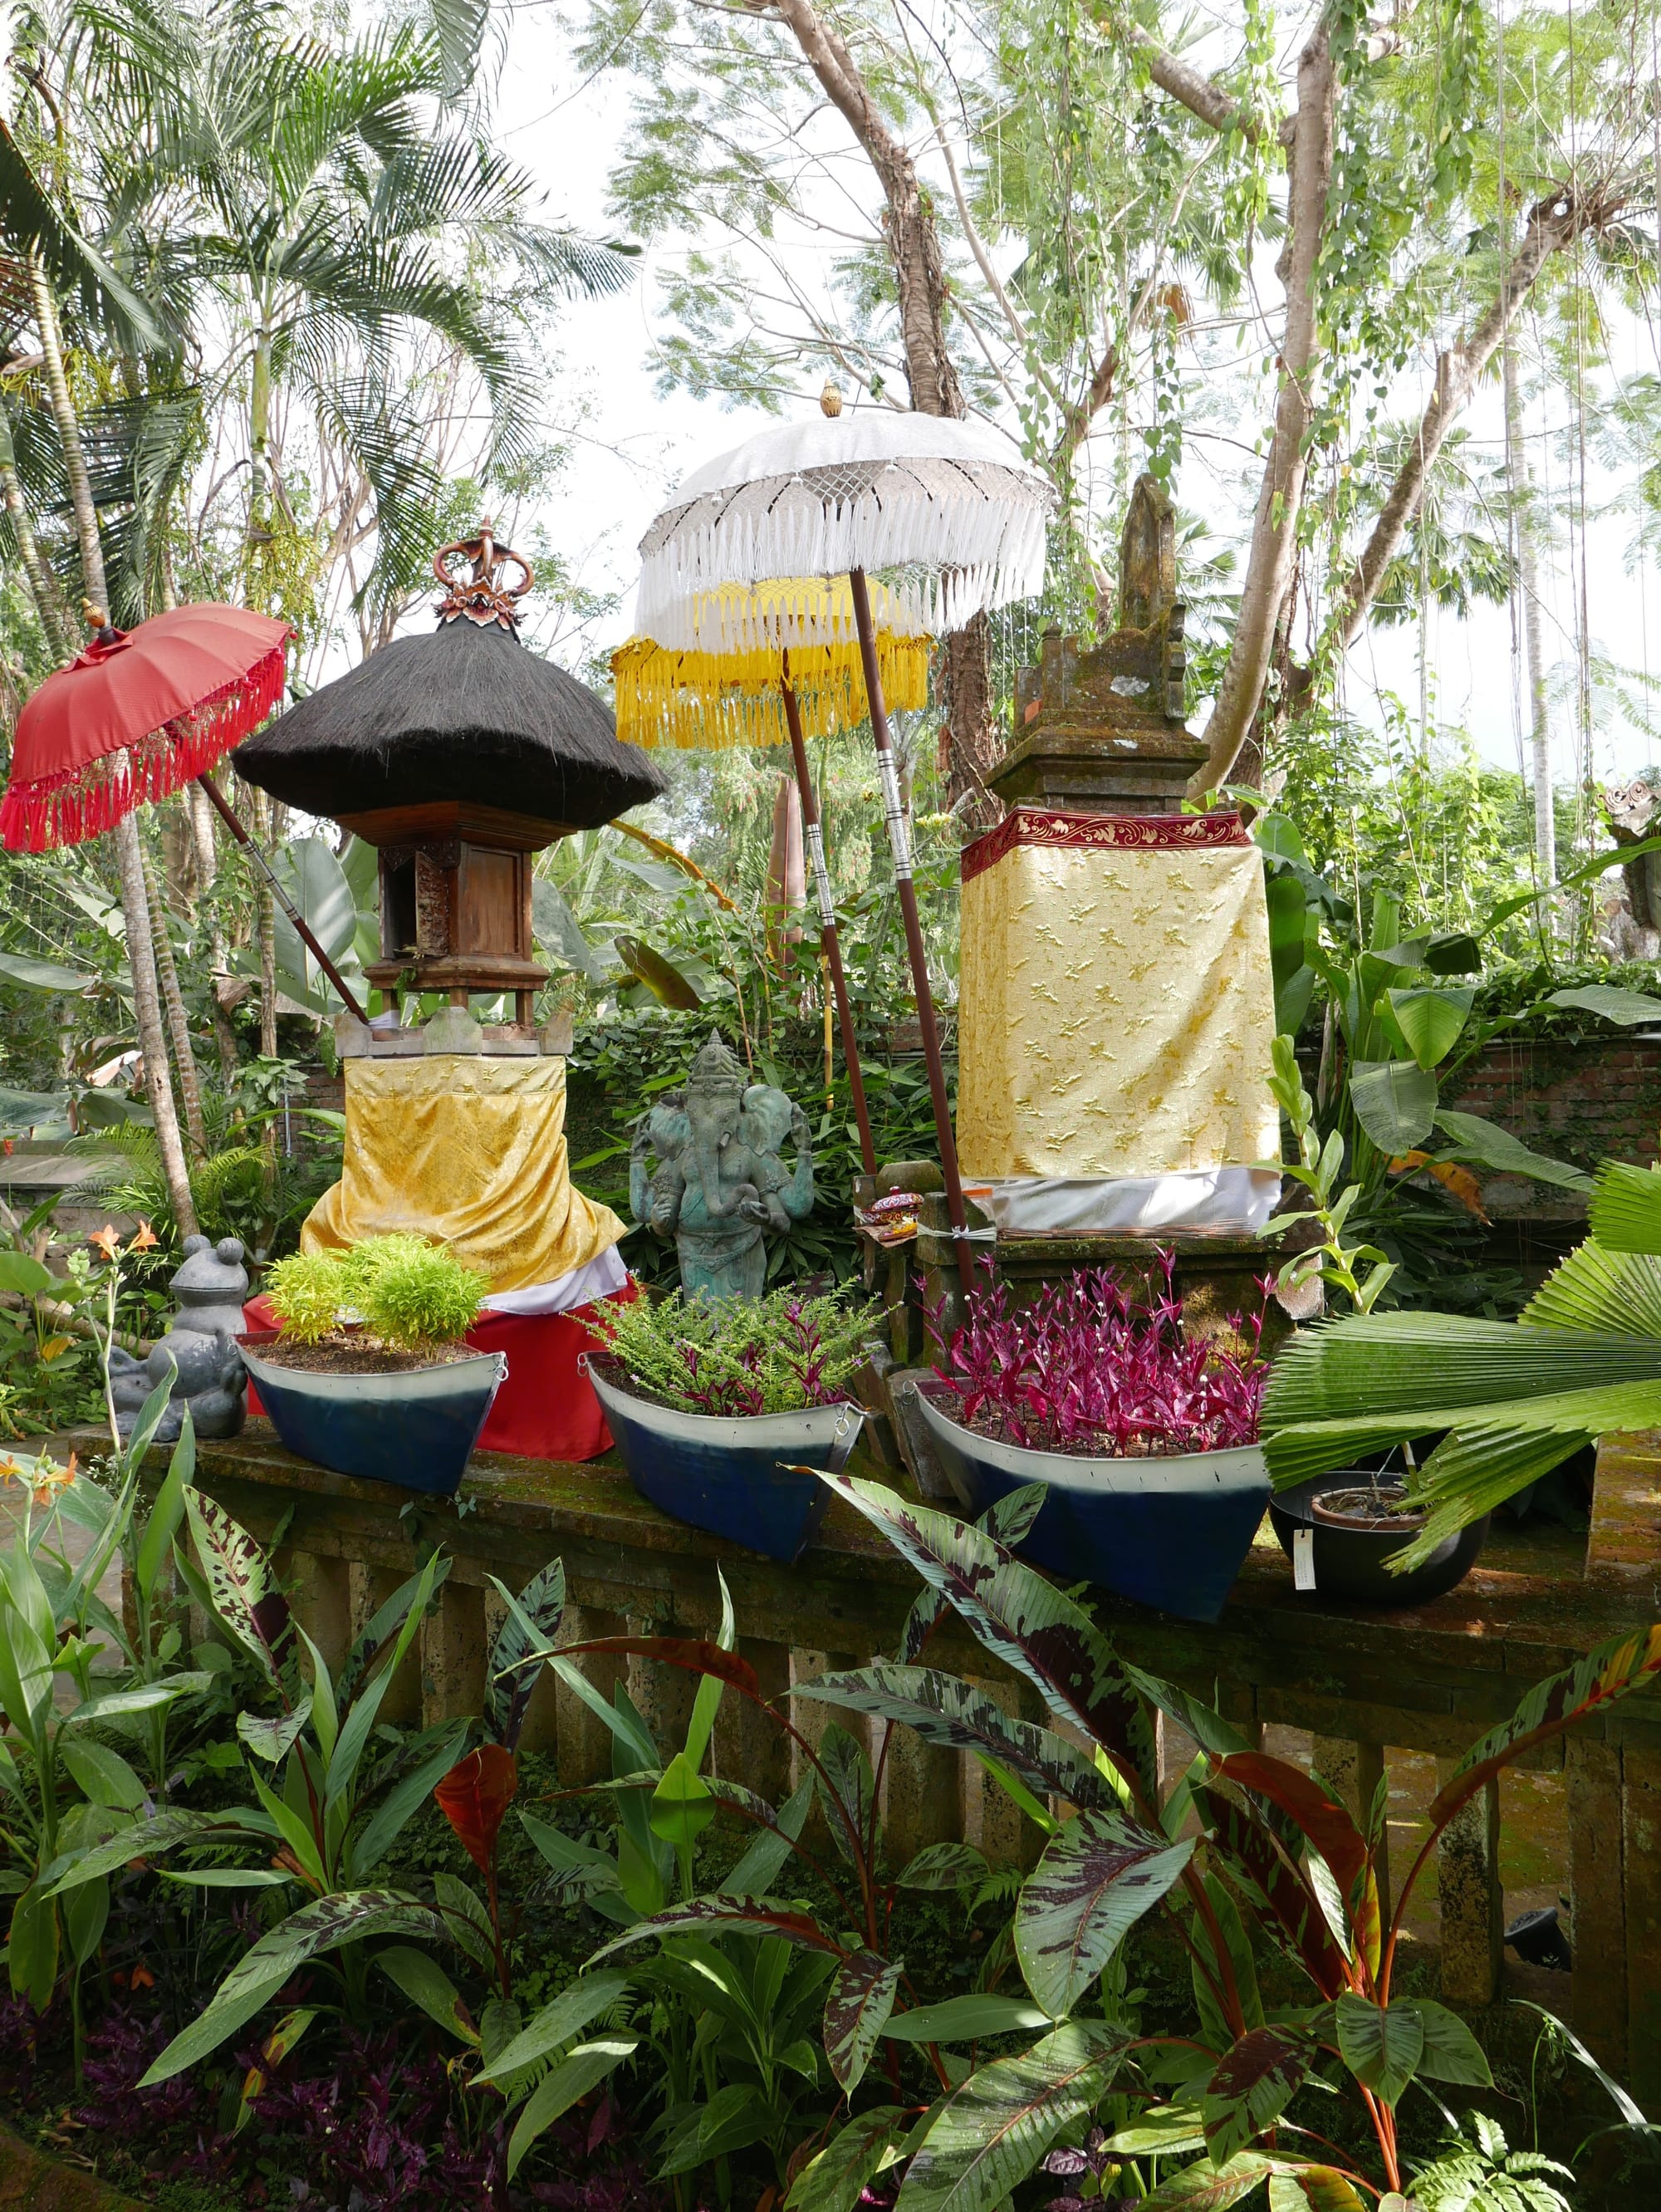 Photo by Author — more shrines at the Gajah Biru Bungalows, Ubud, Bali, Indonesia